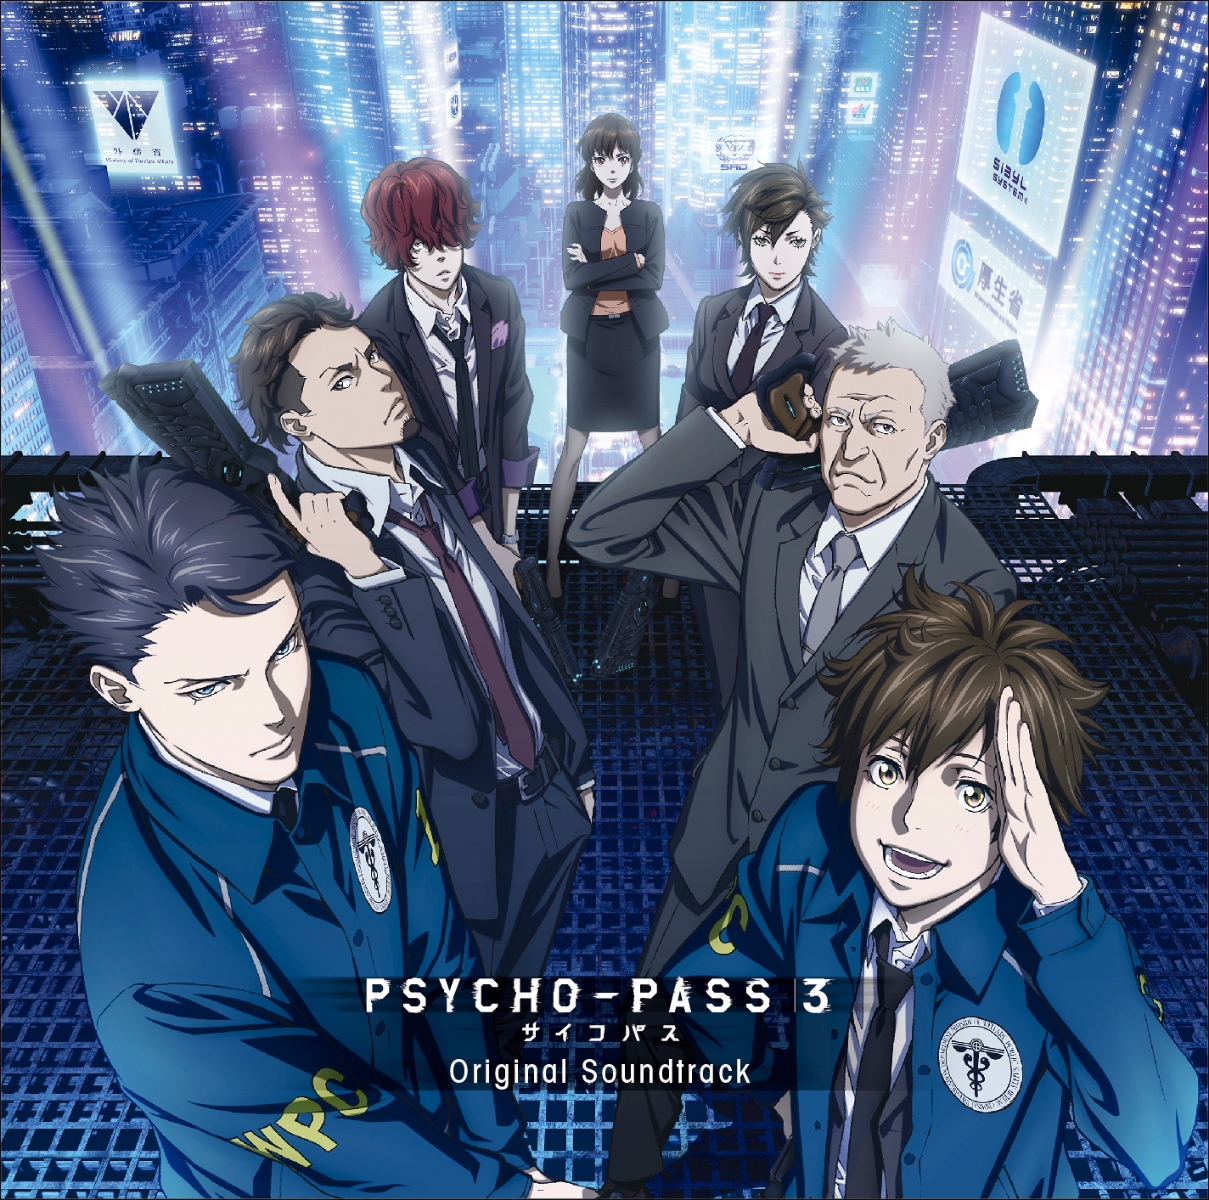 「PSYCHO-PASS サイコパス 3」 Original Soundtrack (通常盤 2CD)画像